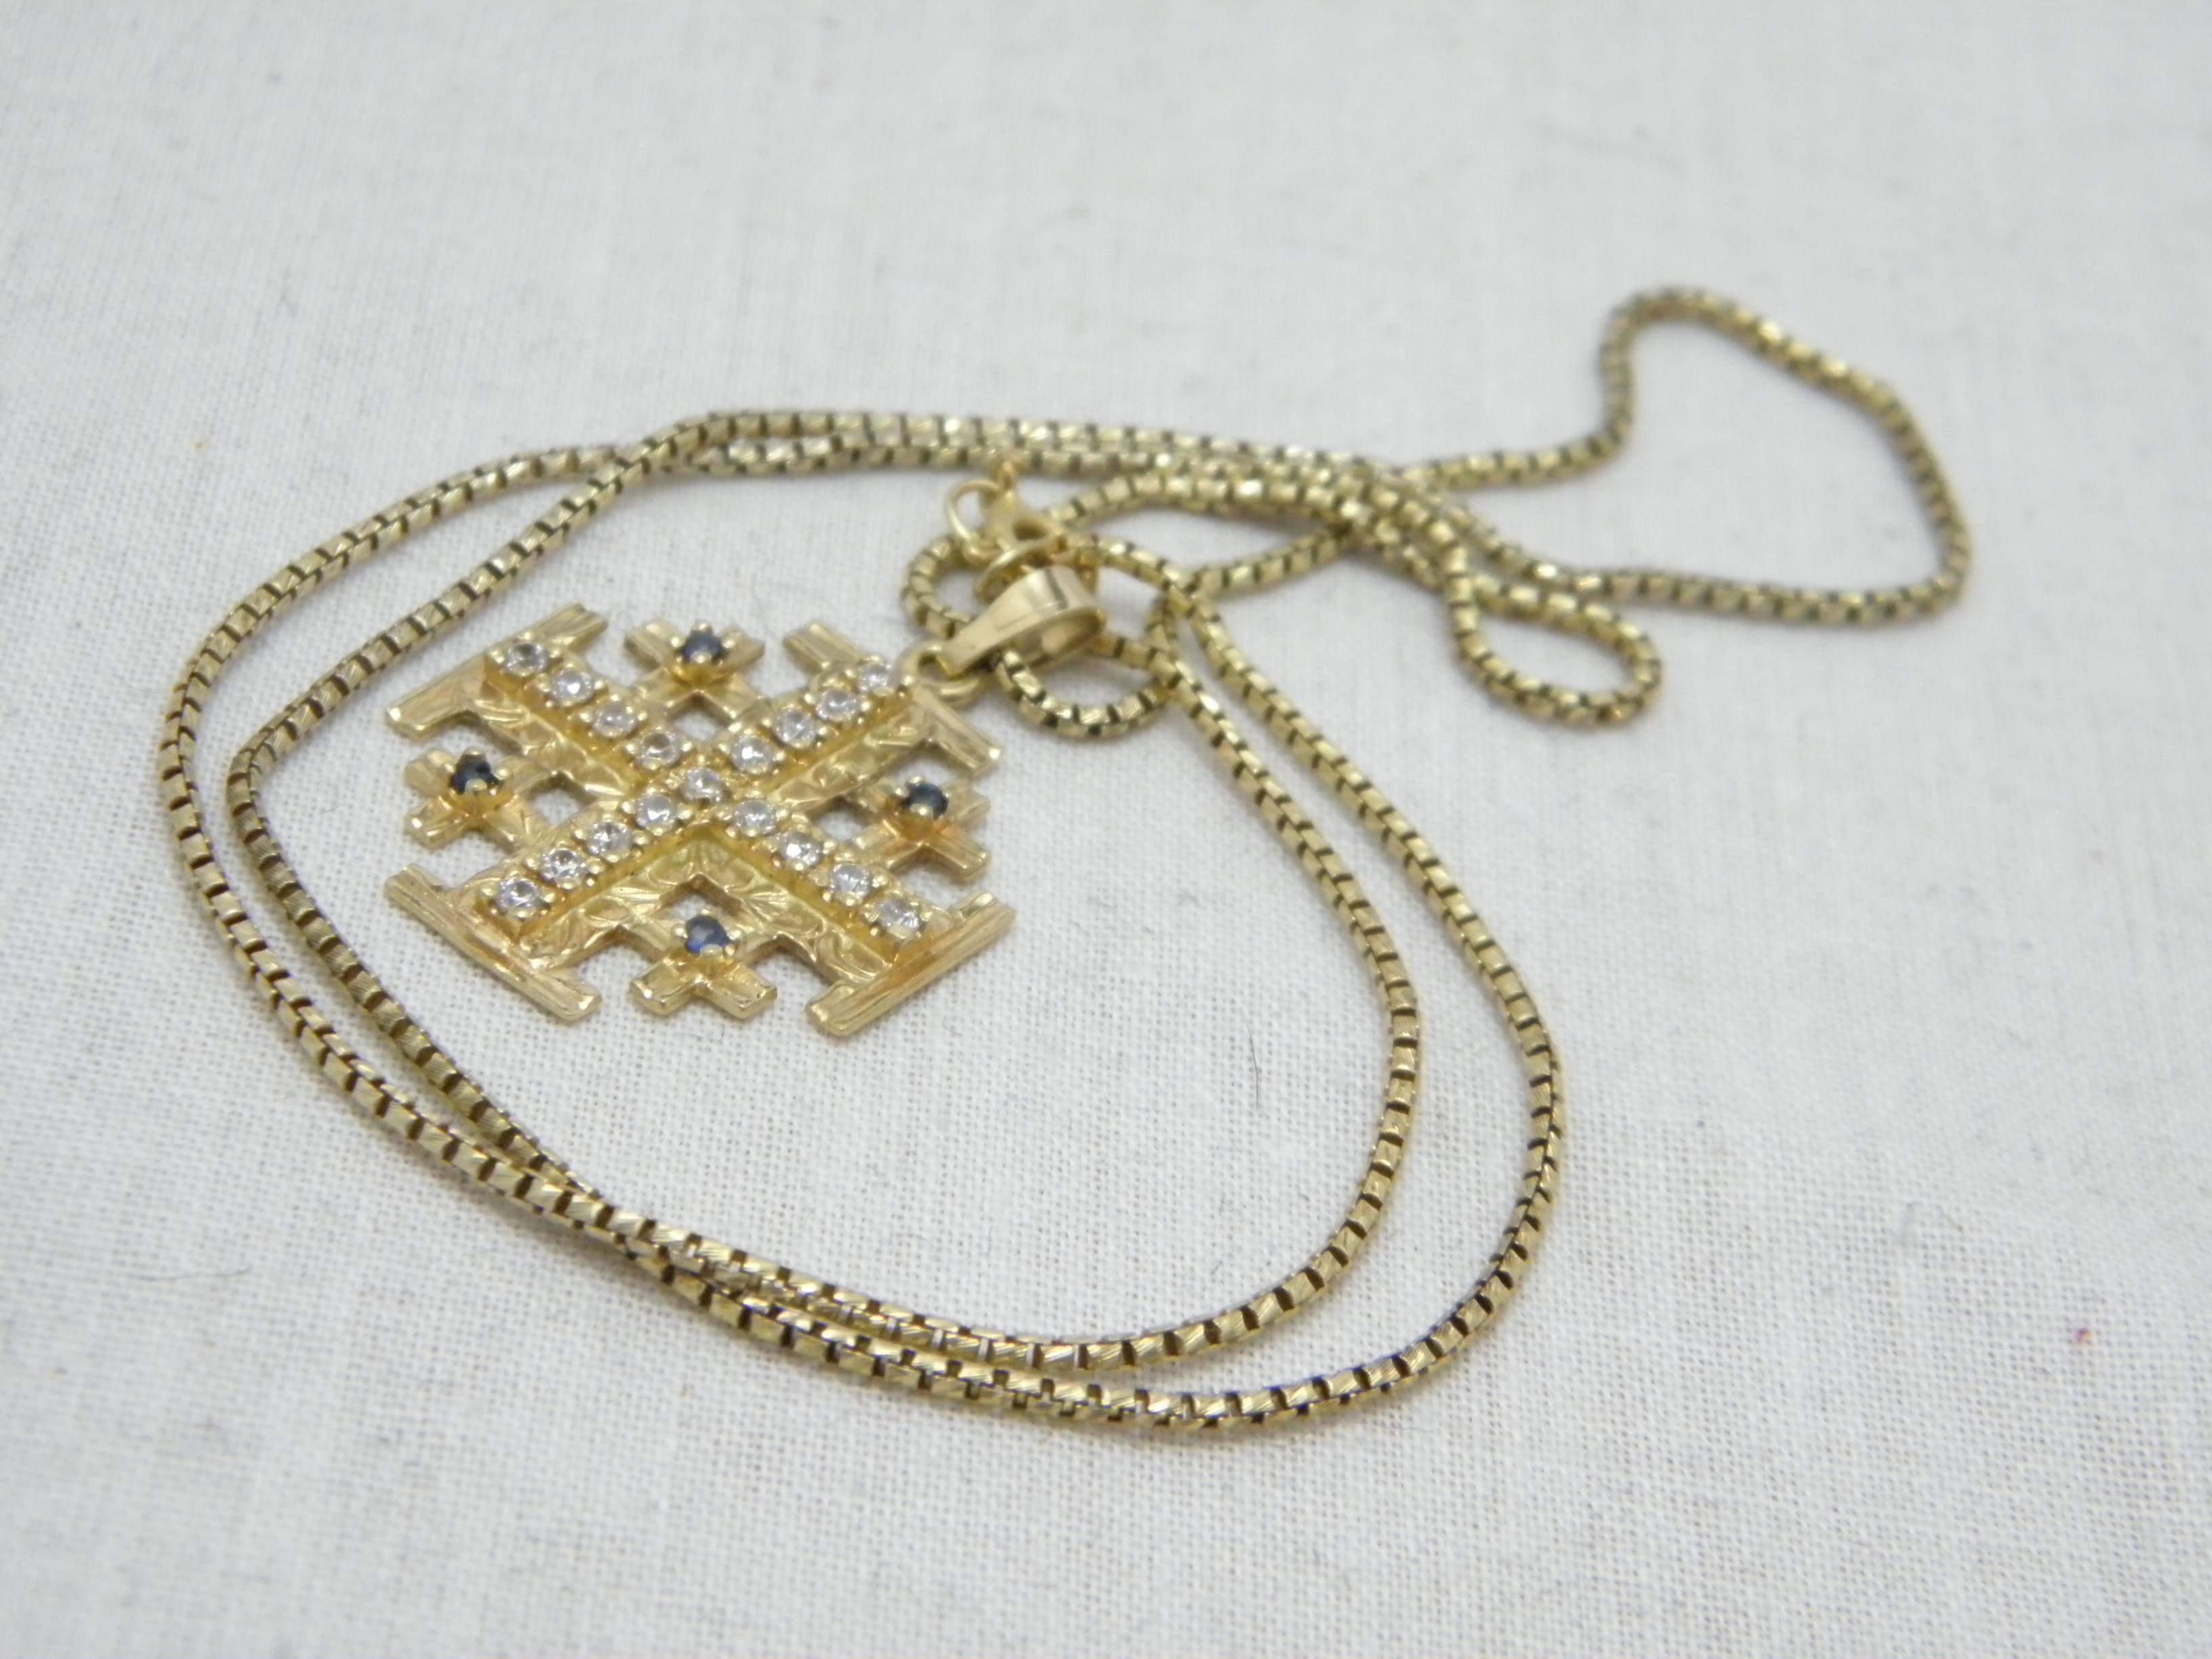 Vintage 14ct Gold Heavy Jerusalem Cross Pendant Necklace Box Chain 585 19 Inch For Sale 1